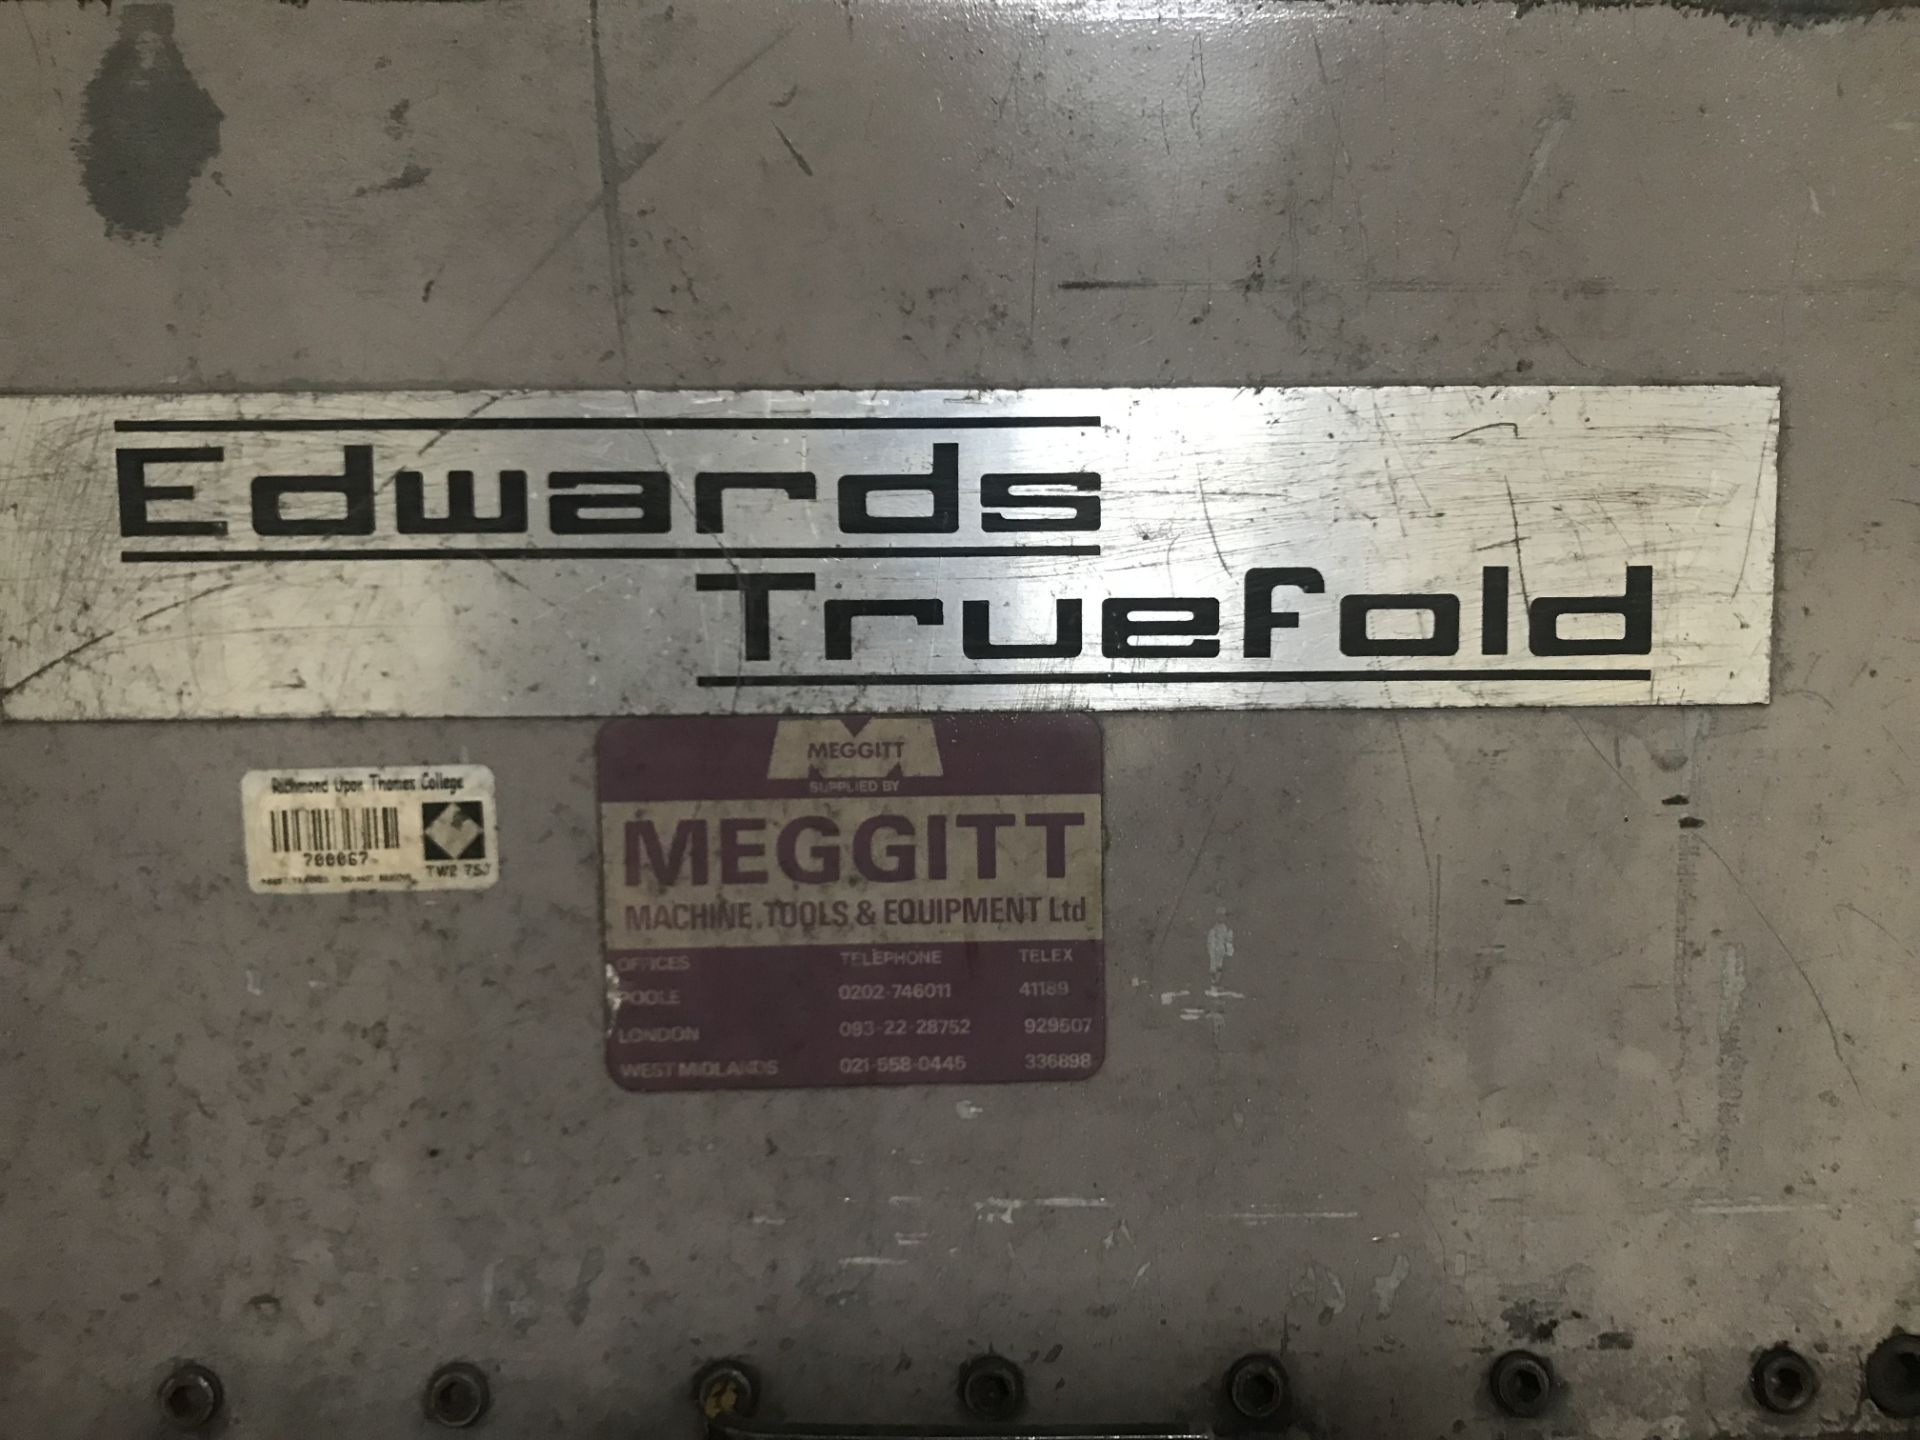 Ewards Truefold 600 Metal Folder - Image 2 of 3